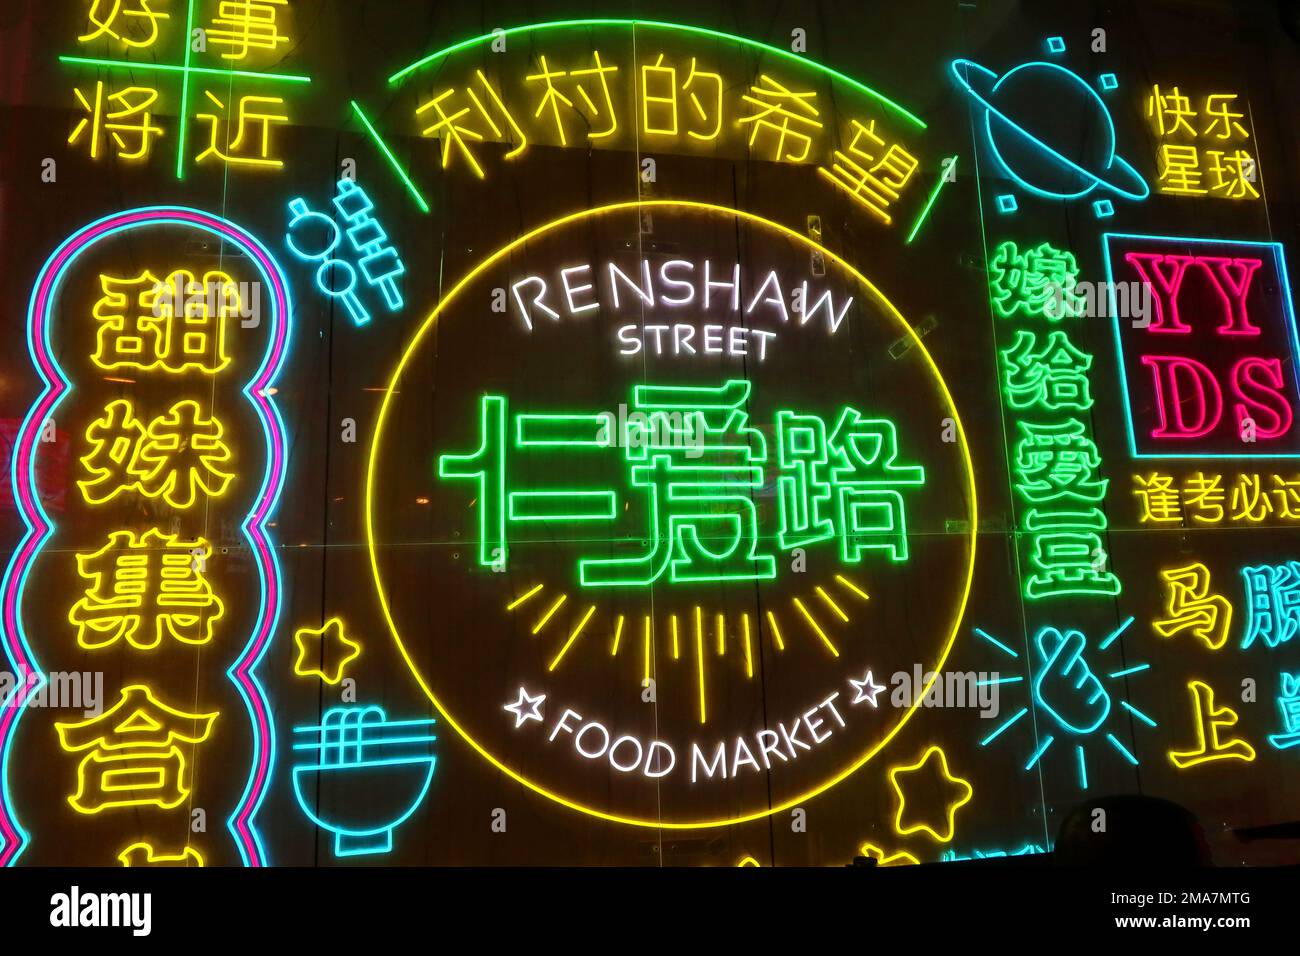 Food Market Neon, 85-97 Renshaw Street, Liverpool, Merseyside, England, UK, L1 2SP - Speisesaal mit asiatischem Thema Stockfoto